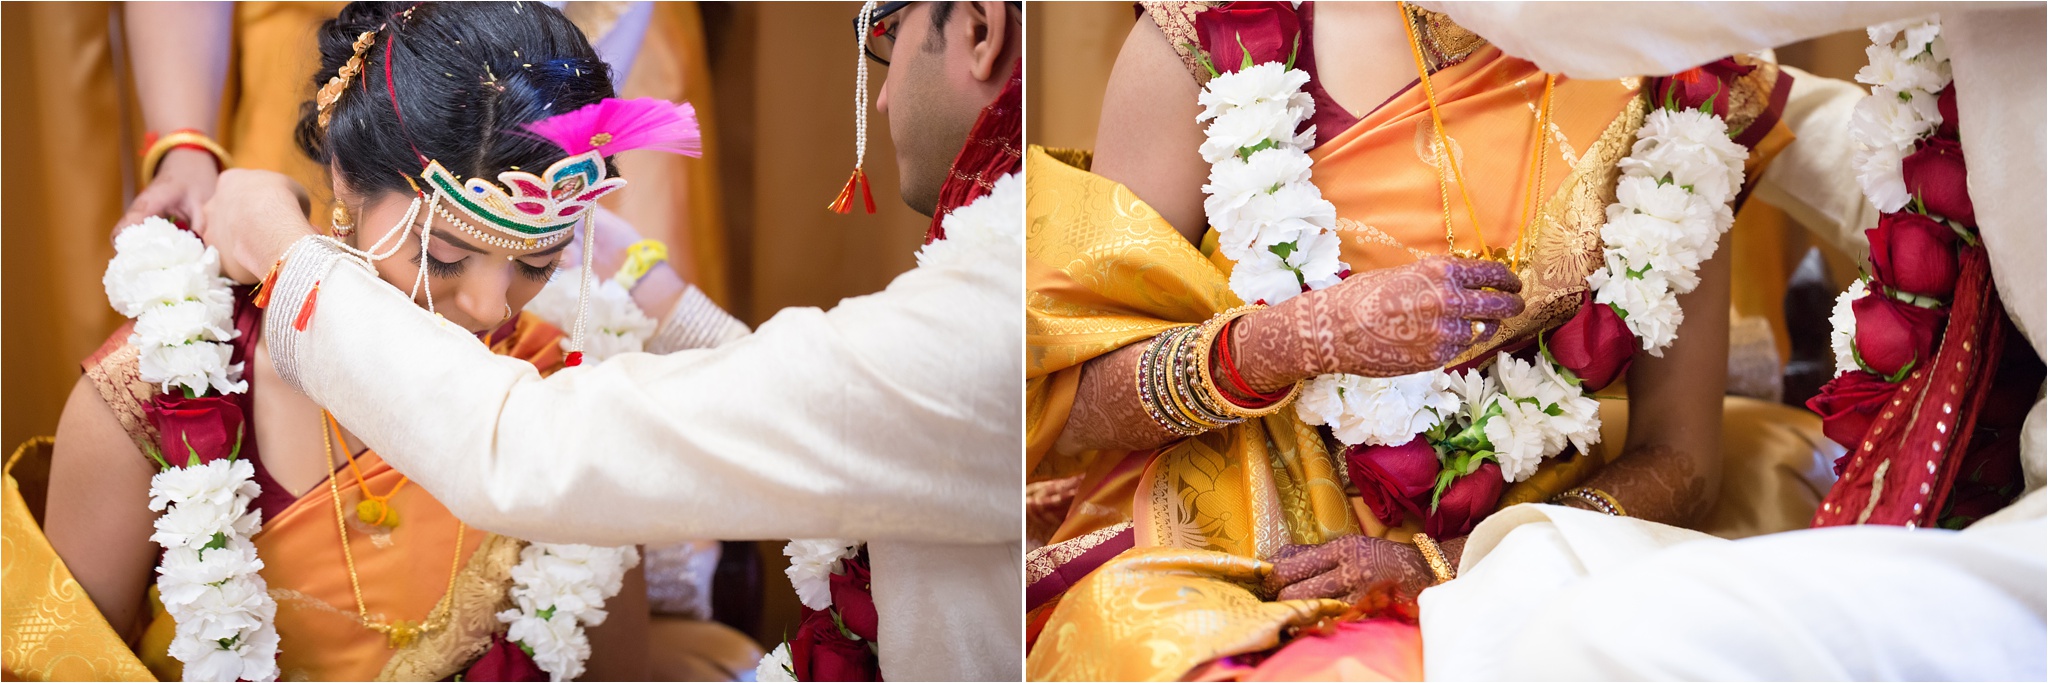 Livermore_Temple_Hindu_Wedding_Photos_0012.jpg